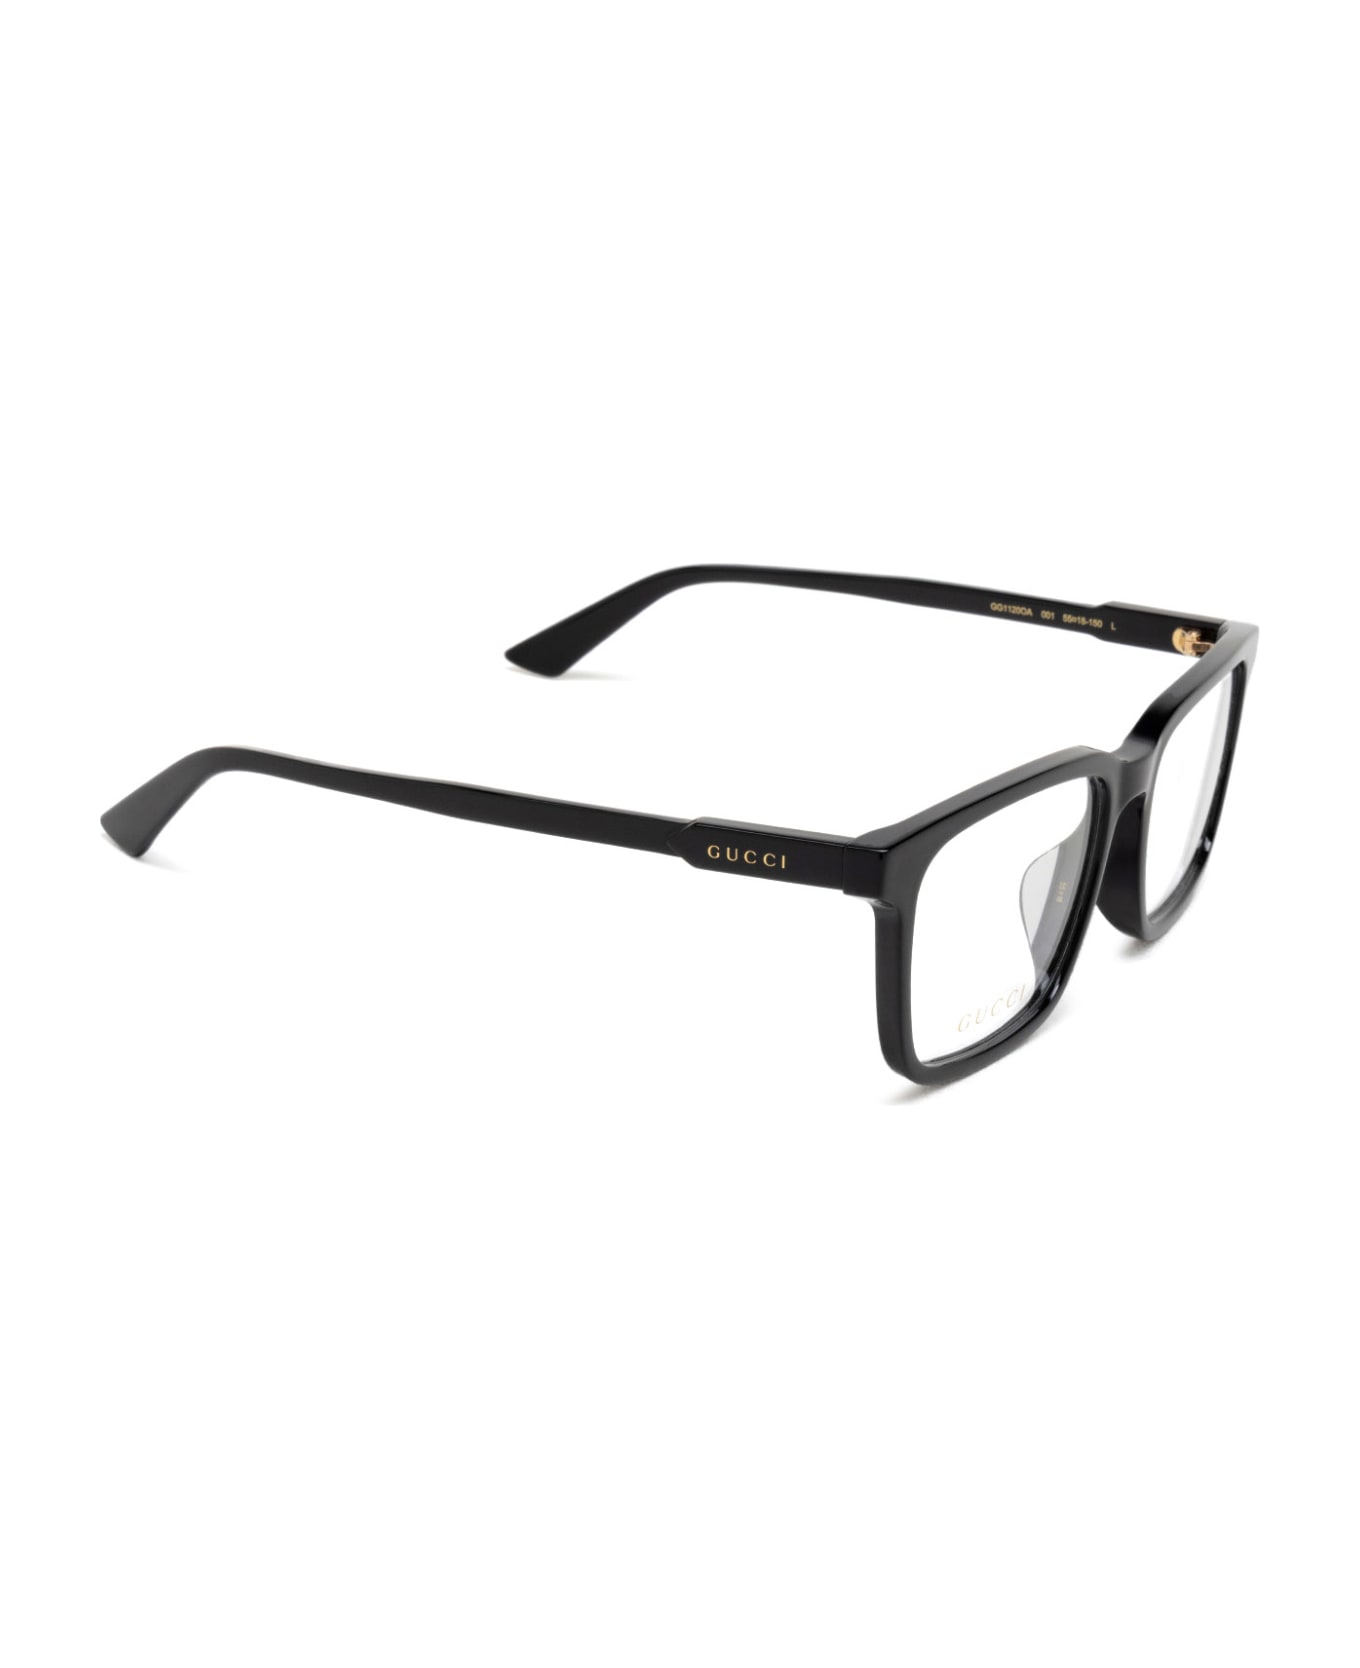 Gucci Eyewear Gg1120oa Black Glasses - Black アイウェア